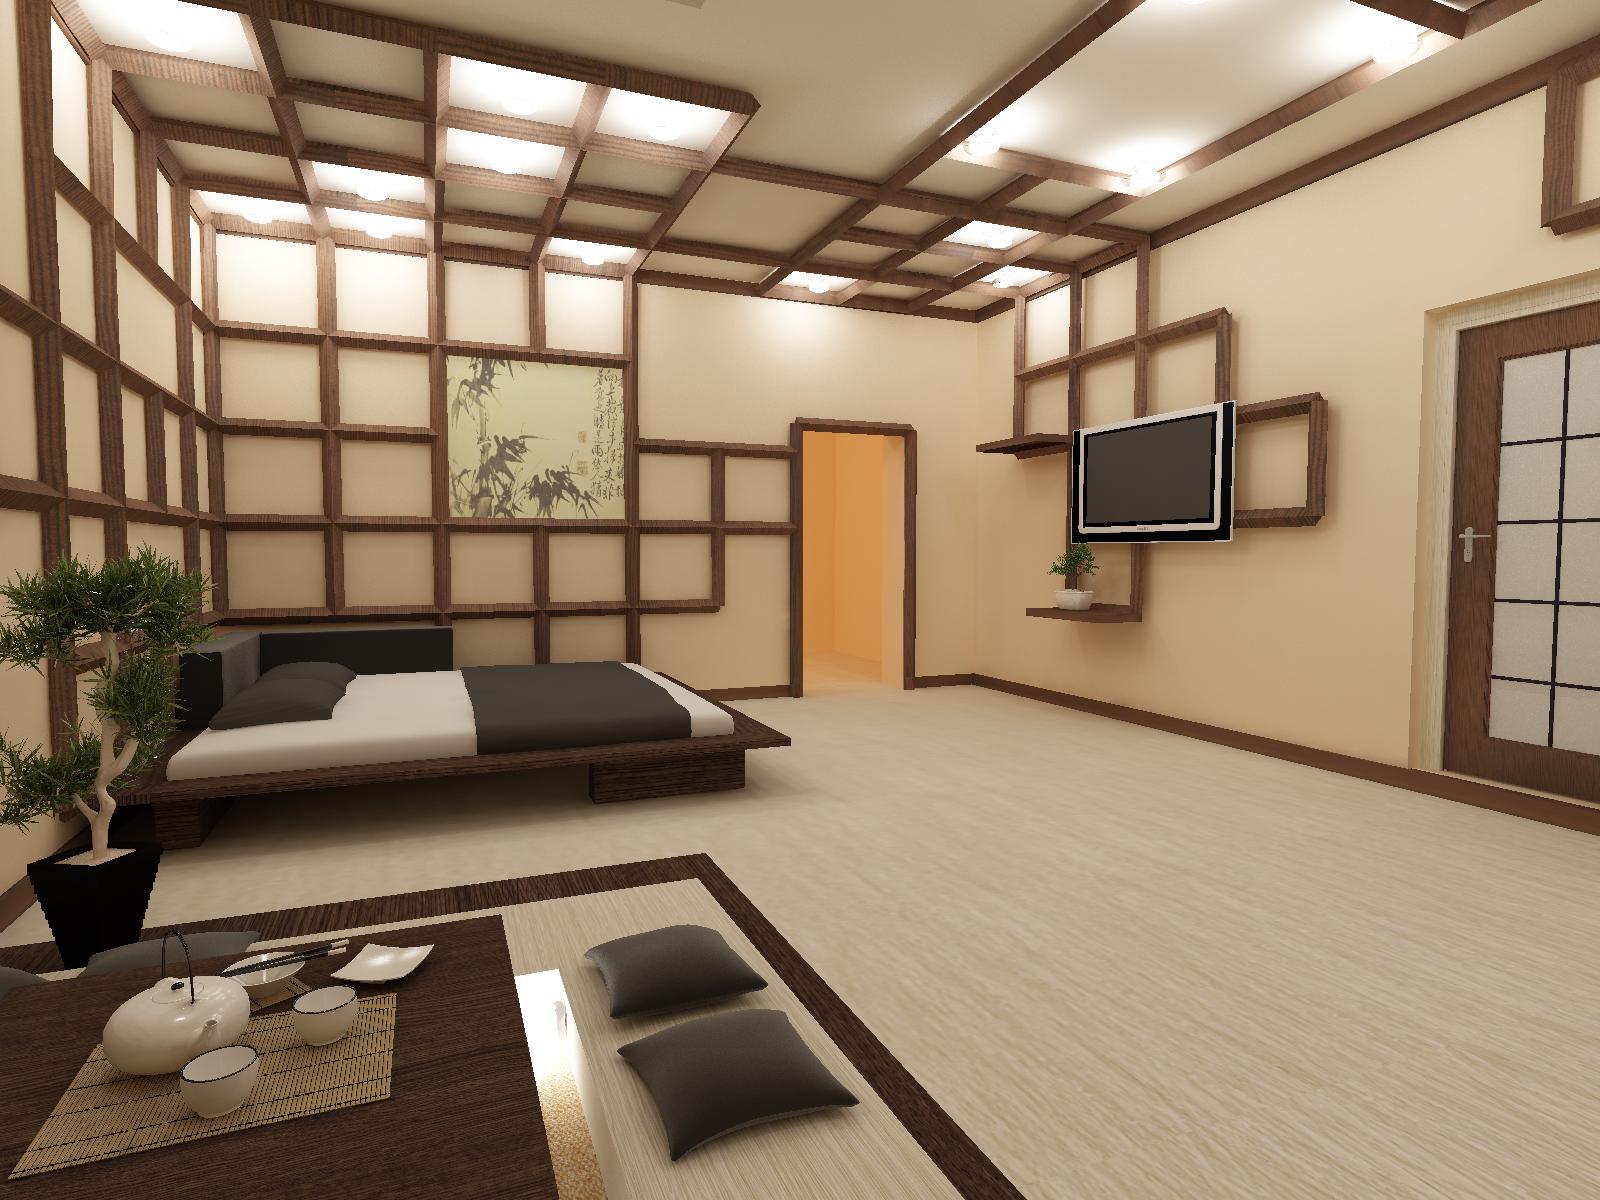 Japanese-style bedroom interior ideas